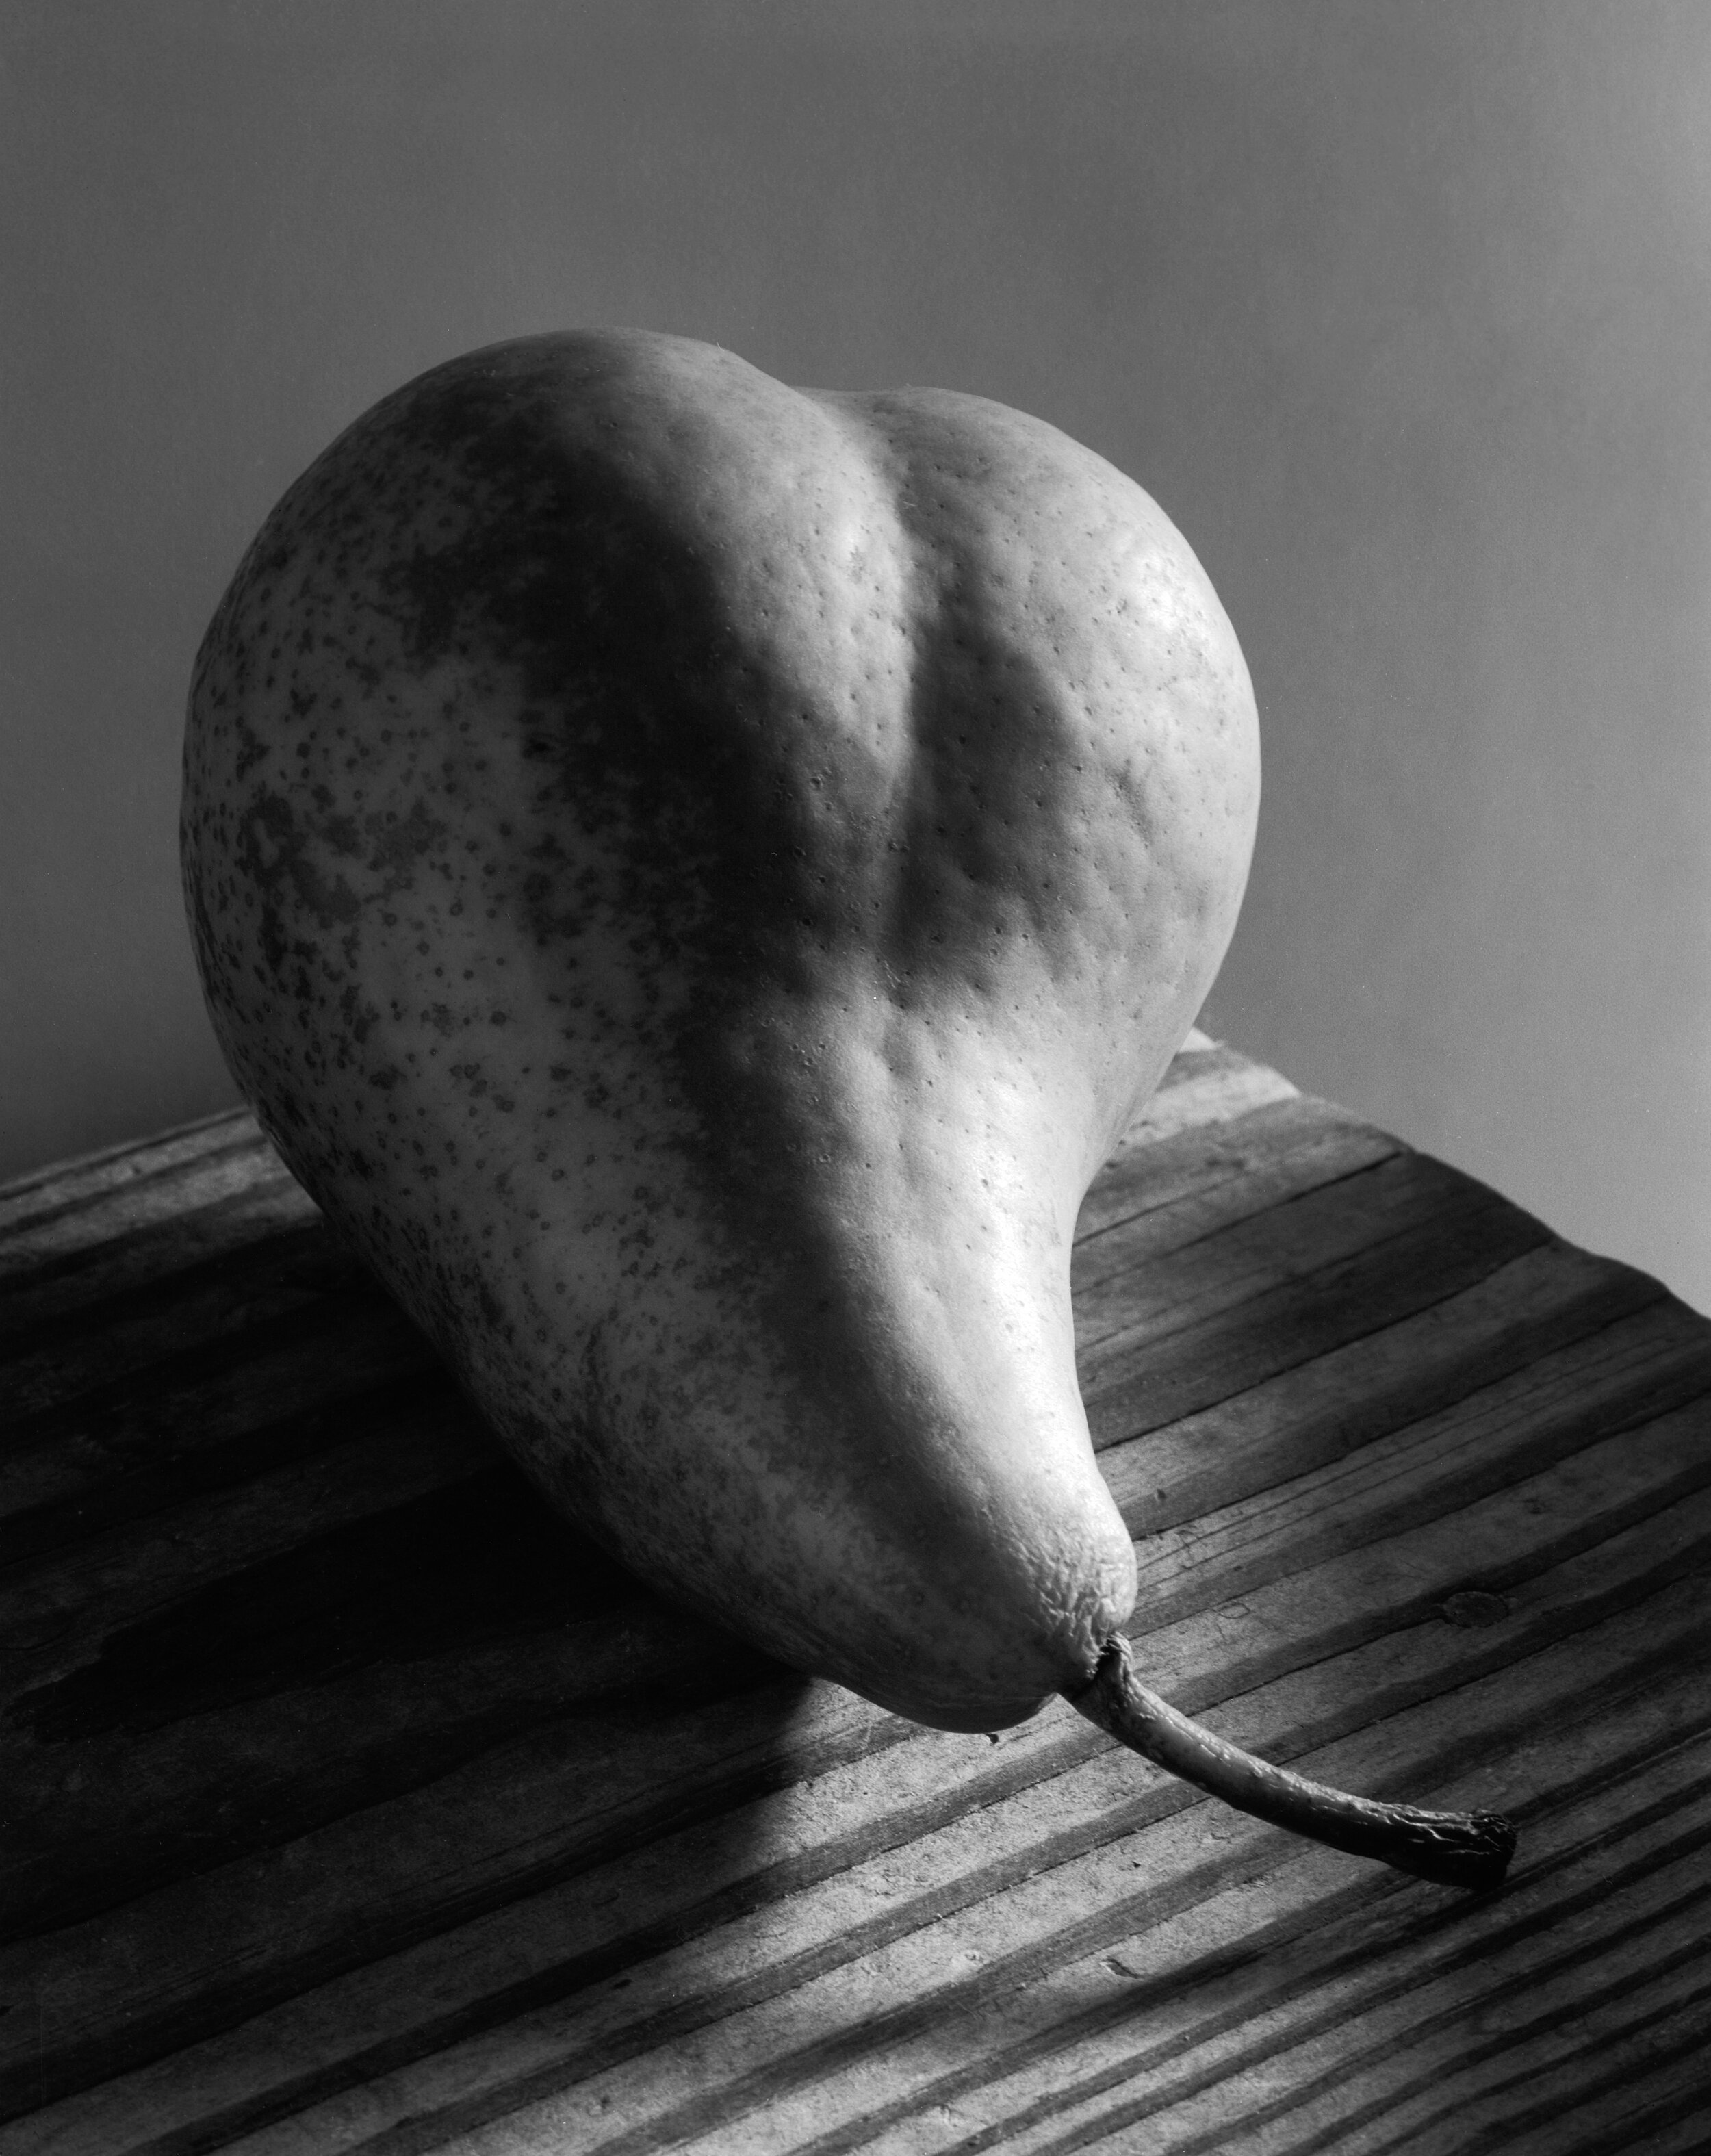 Pear on Striped Board (date unknown)